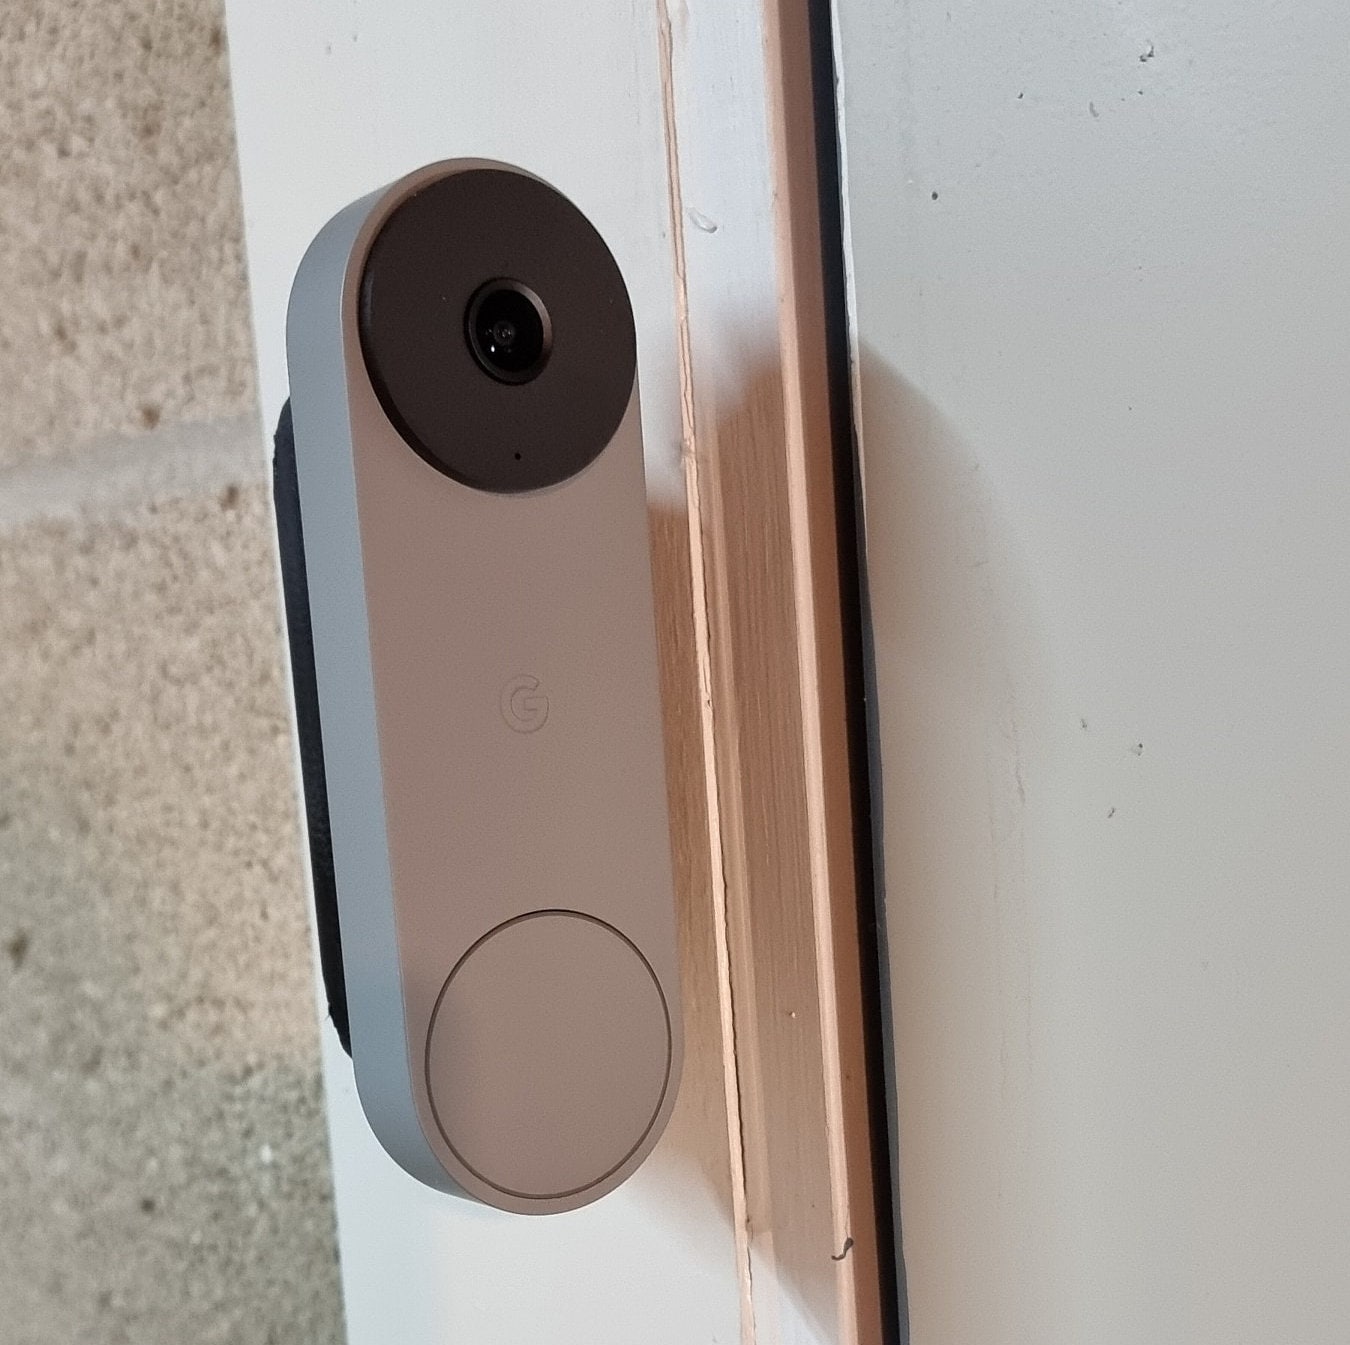 Nest Doorbell Gen 2 Wired Mount. 60 Degrees To Get The Perfect View. Our Nest Doorbell Gen 2 Mount 60 Degrees Aims Your Doorbell Perfectly